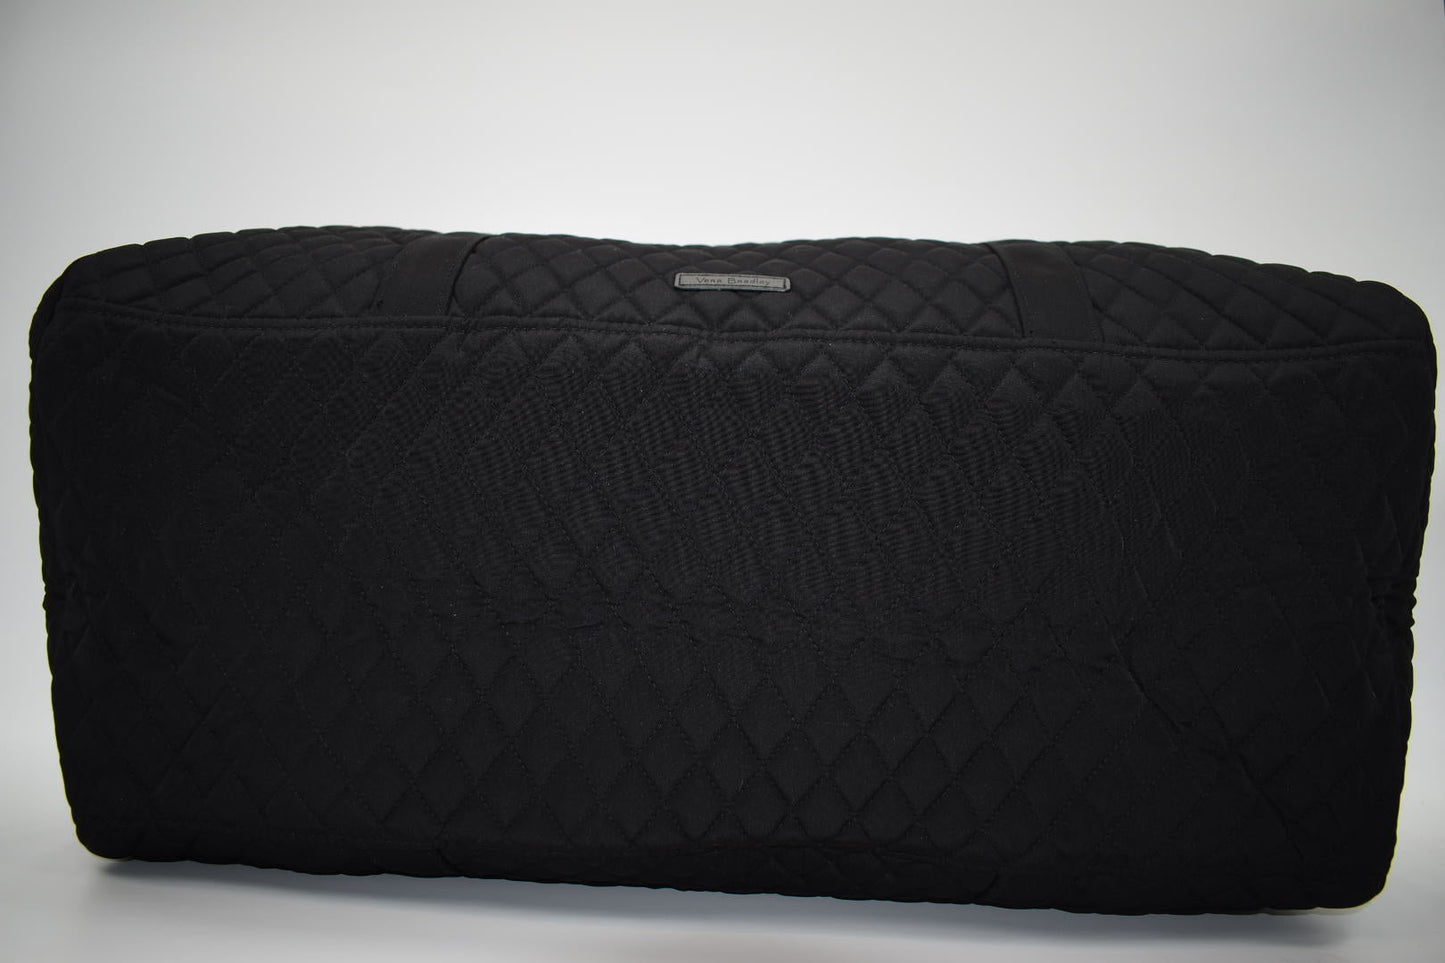 Vera Bradley Microfiber Large Duffel Bag in "Classic Black" Pattern